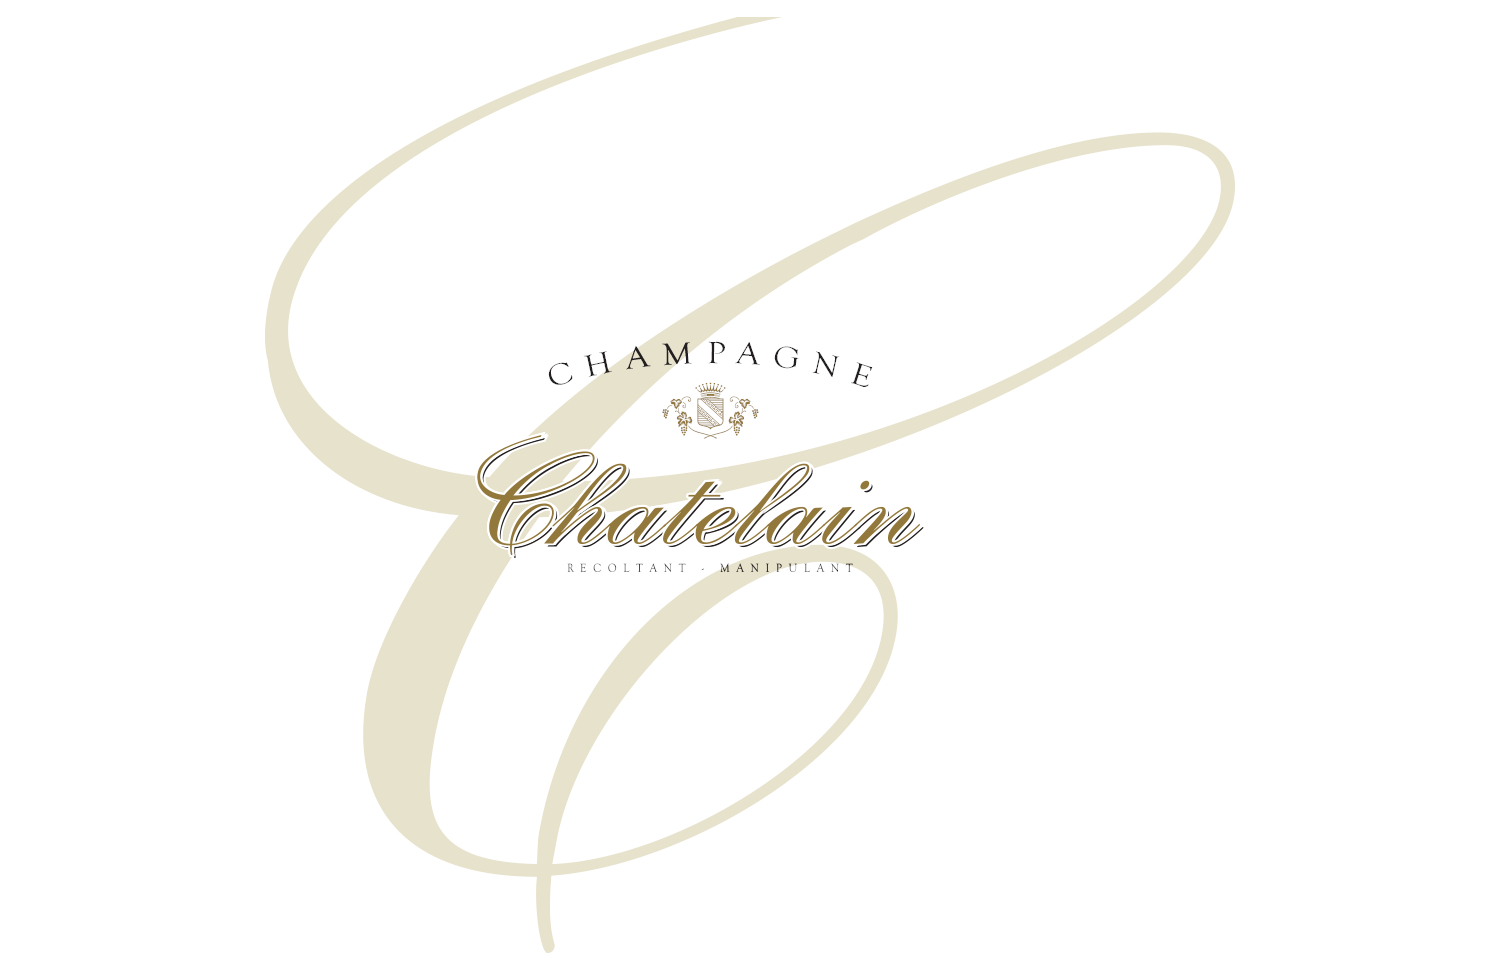 Champagne Chatelain